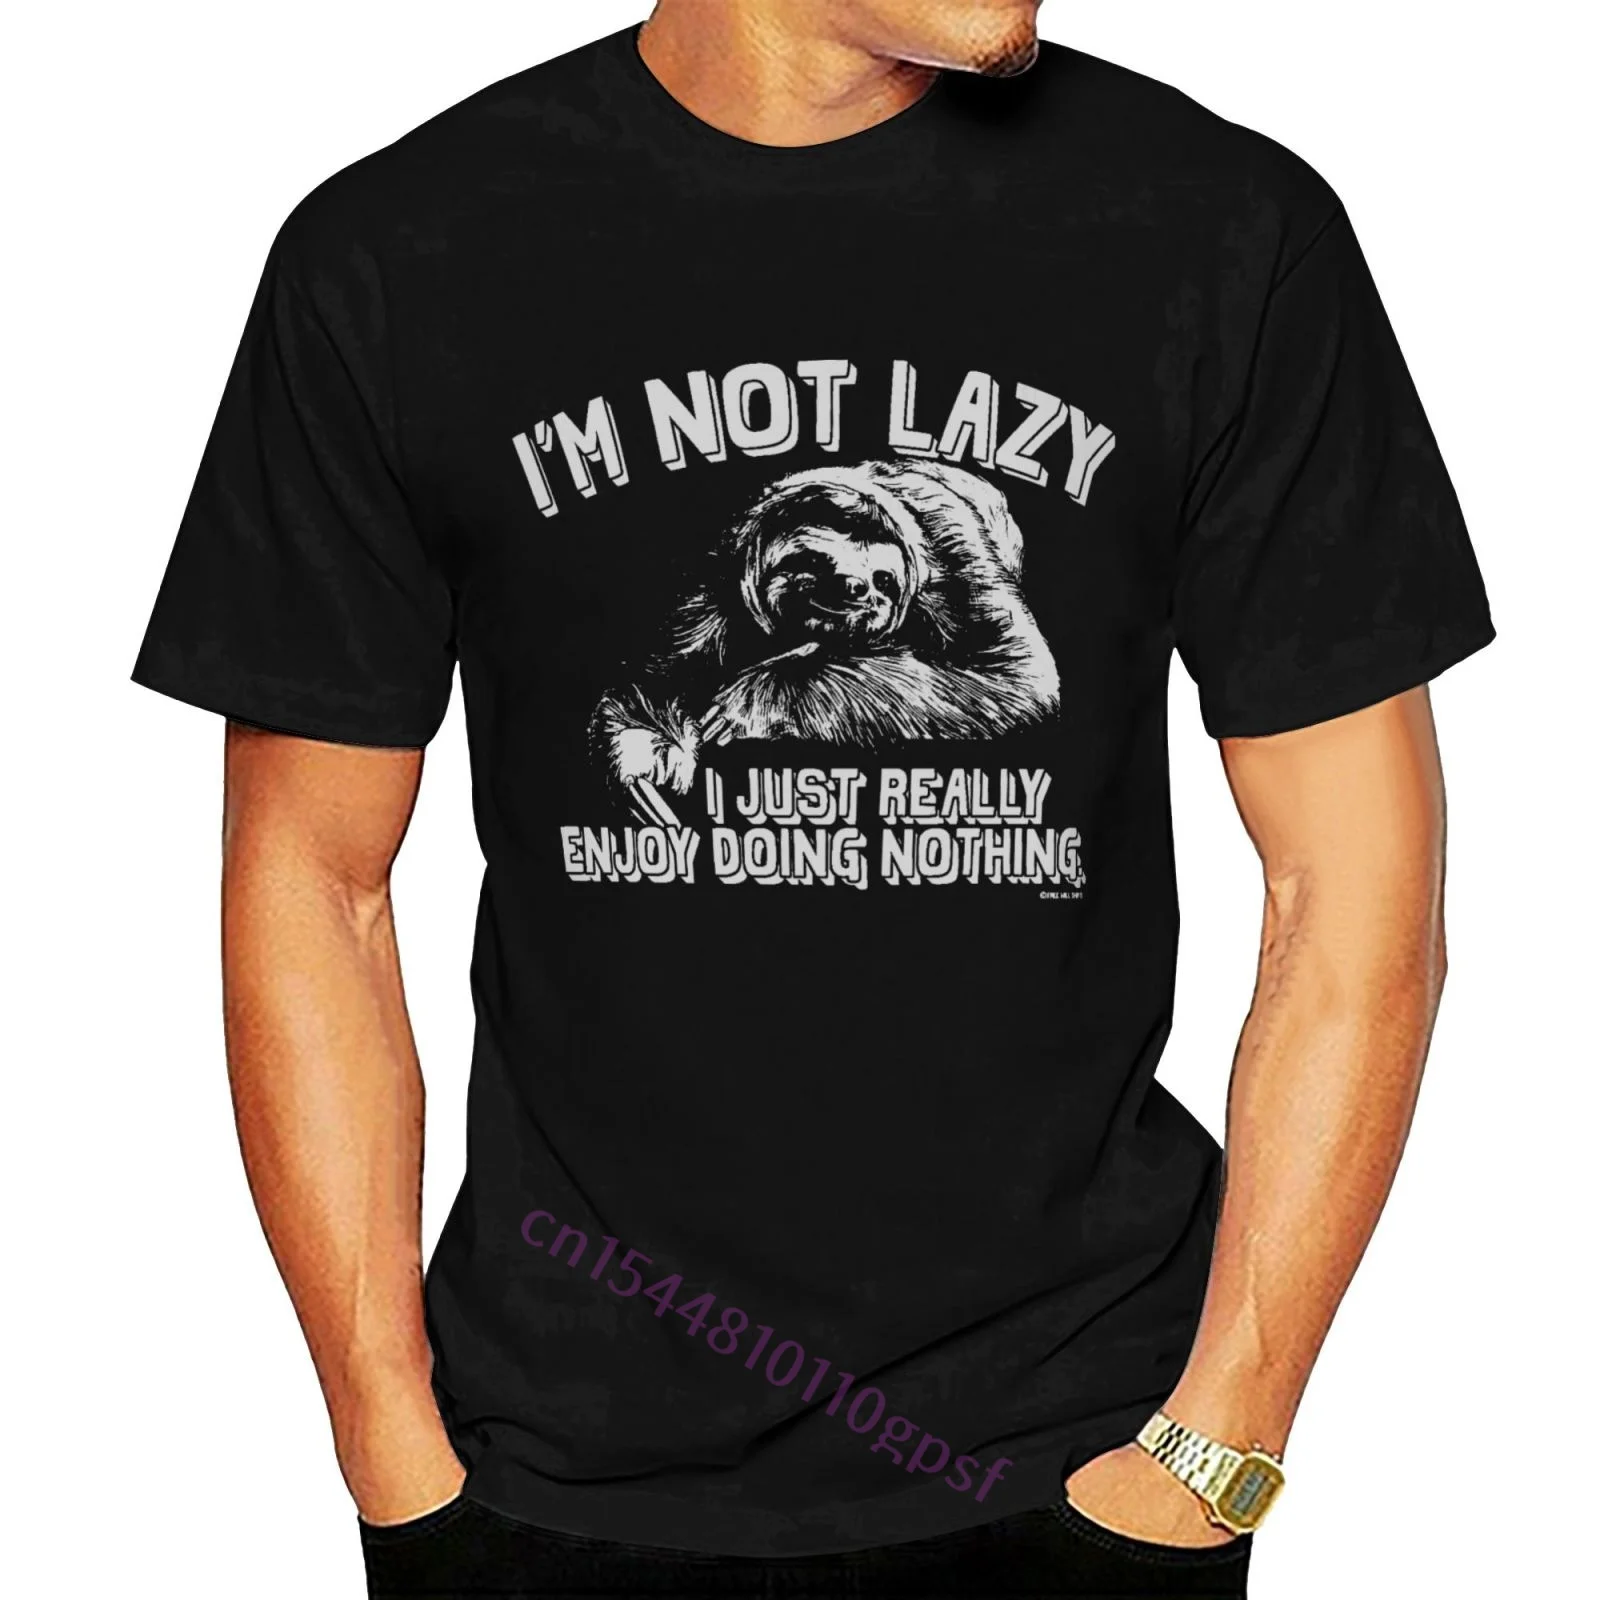 

IM NOT LAZY Funny Sloth Black T-shirt Men T Shirt Round Collar Short Sleeve Tee Shirts Top Tee